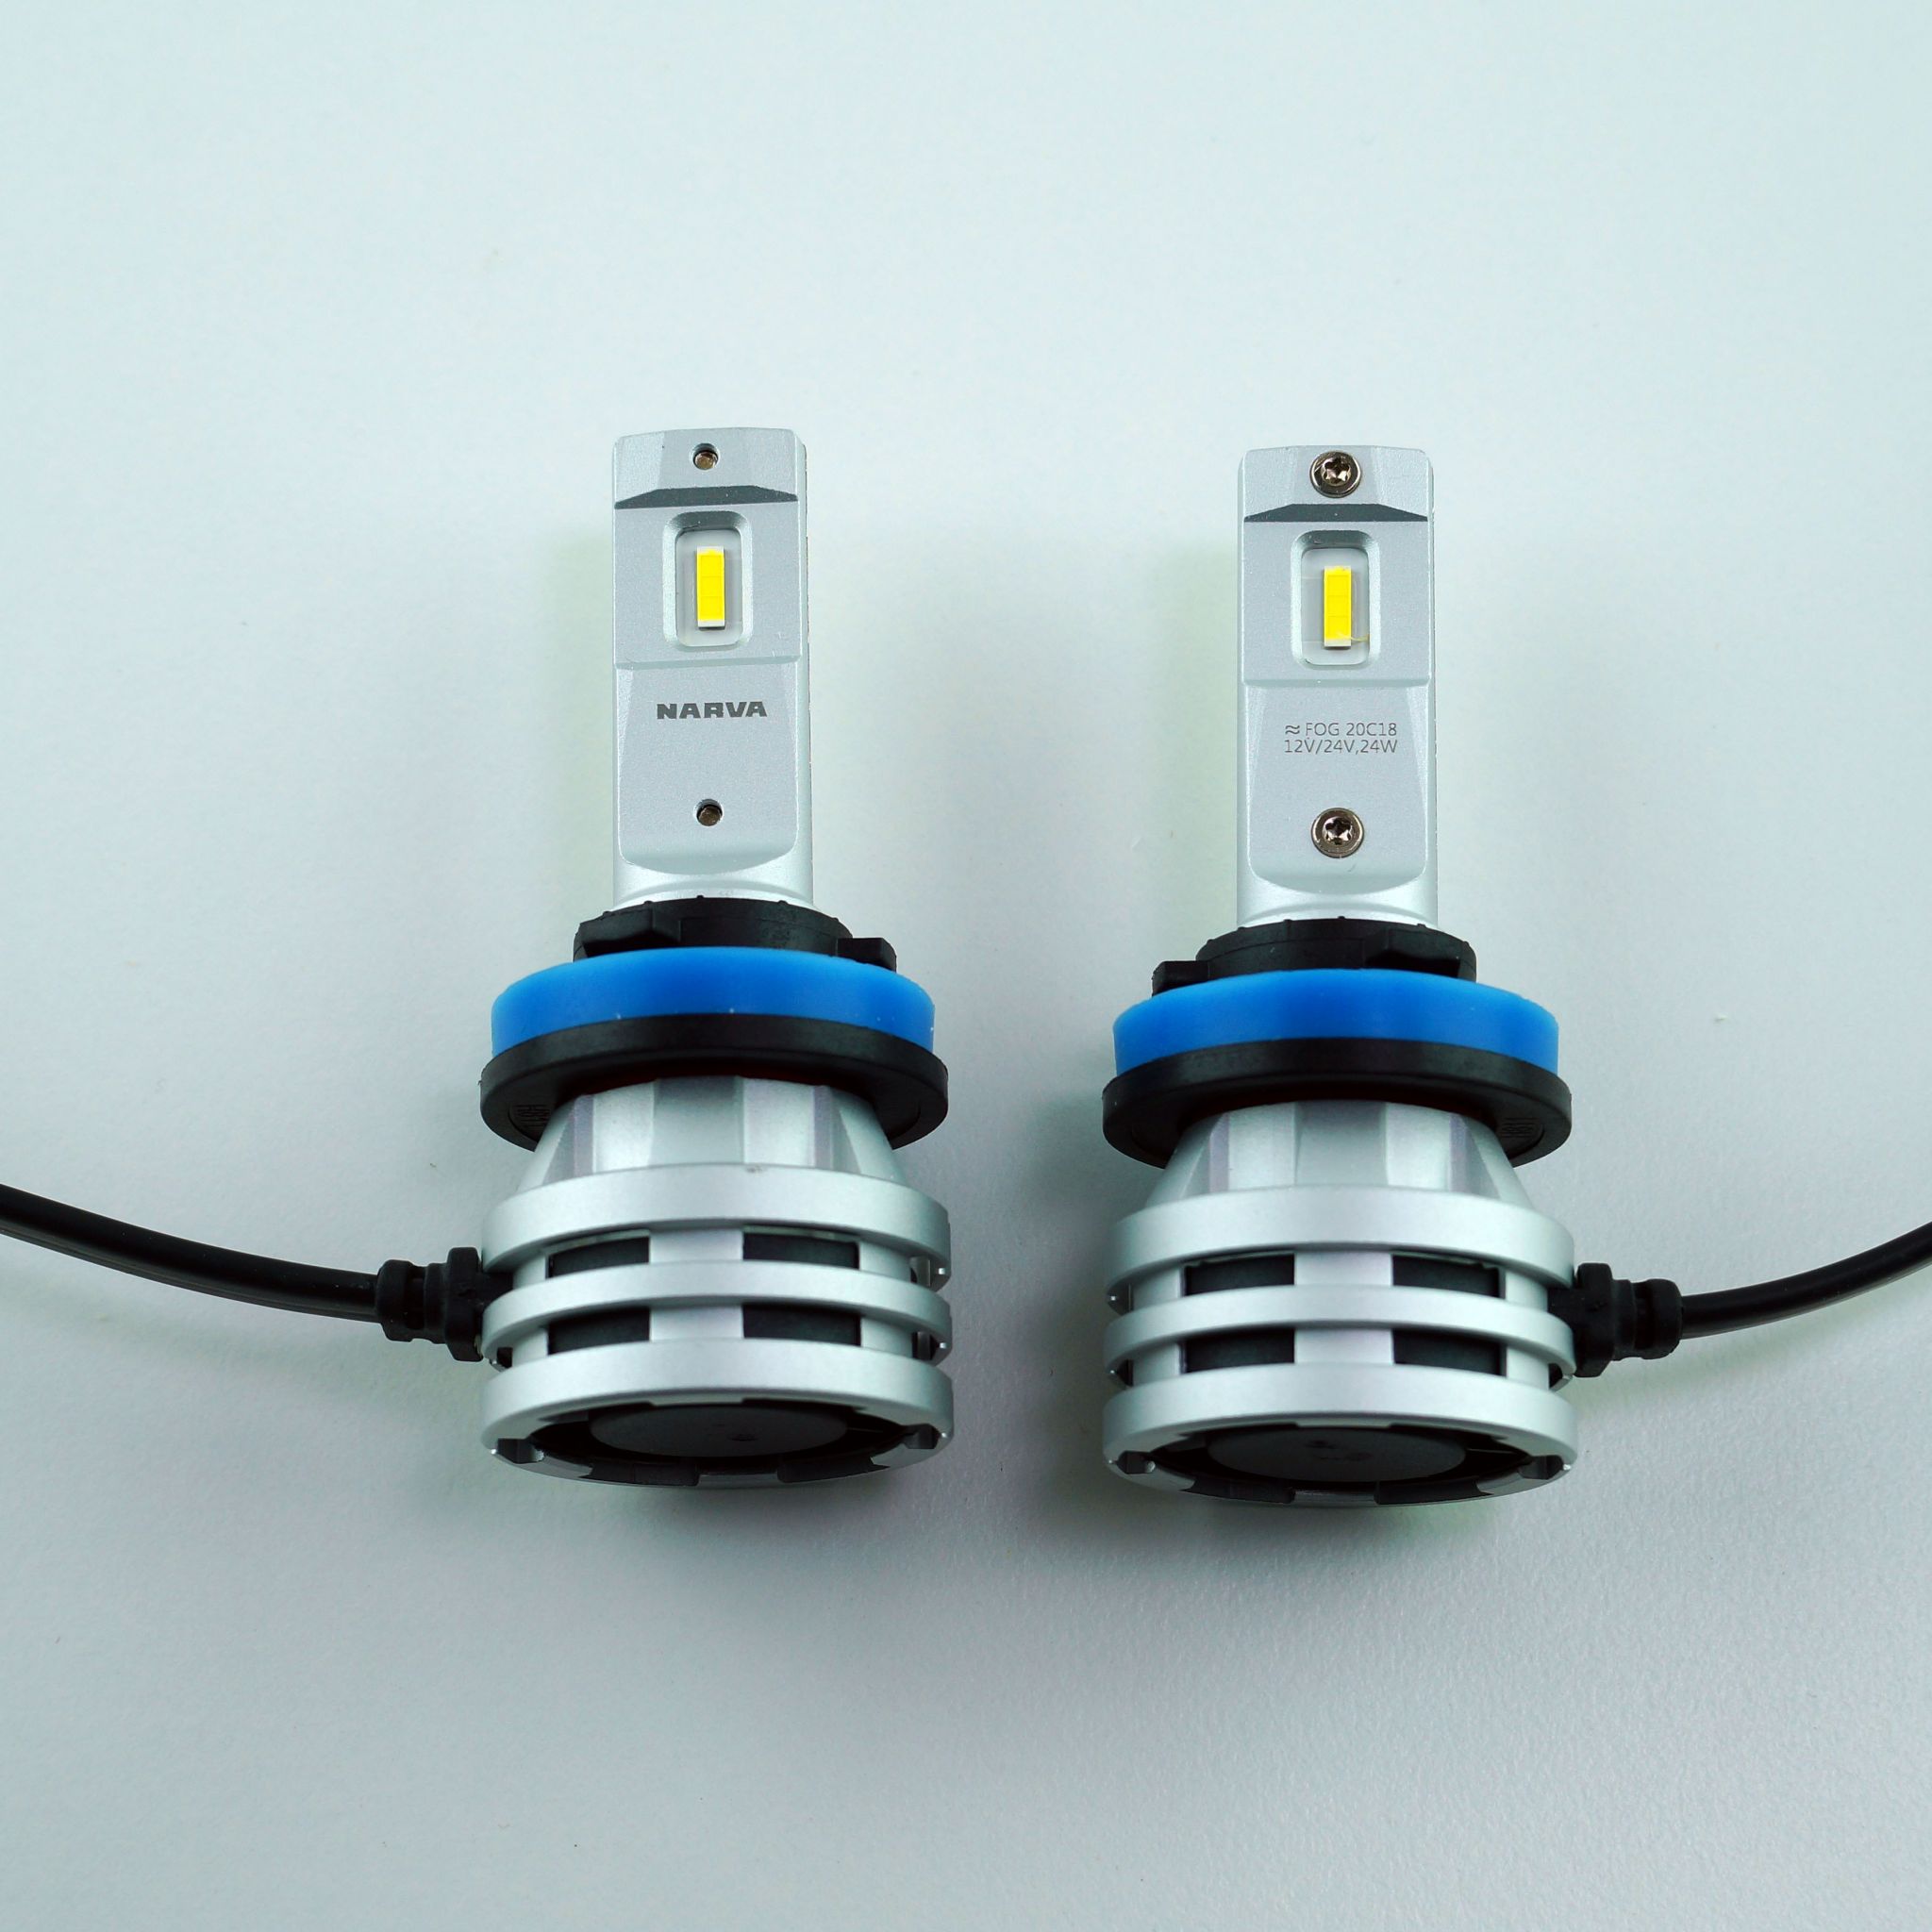 Kit Ampoules LED H11 NARVA 24W 12-24V 6500K - 180483000 - German Technology  - France-Xenon